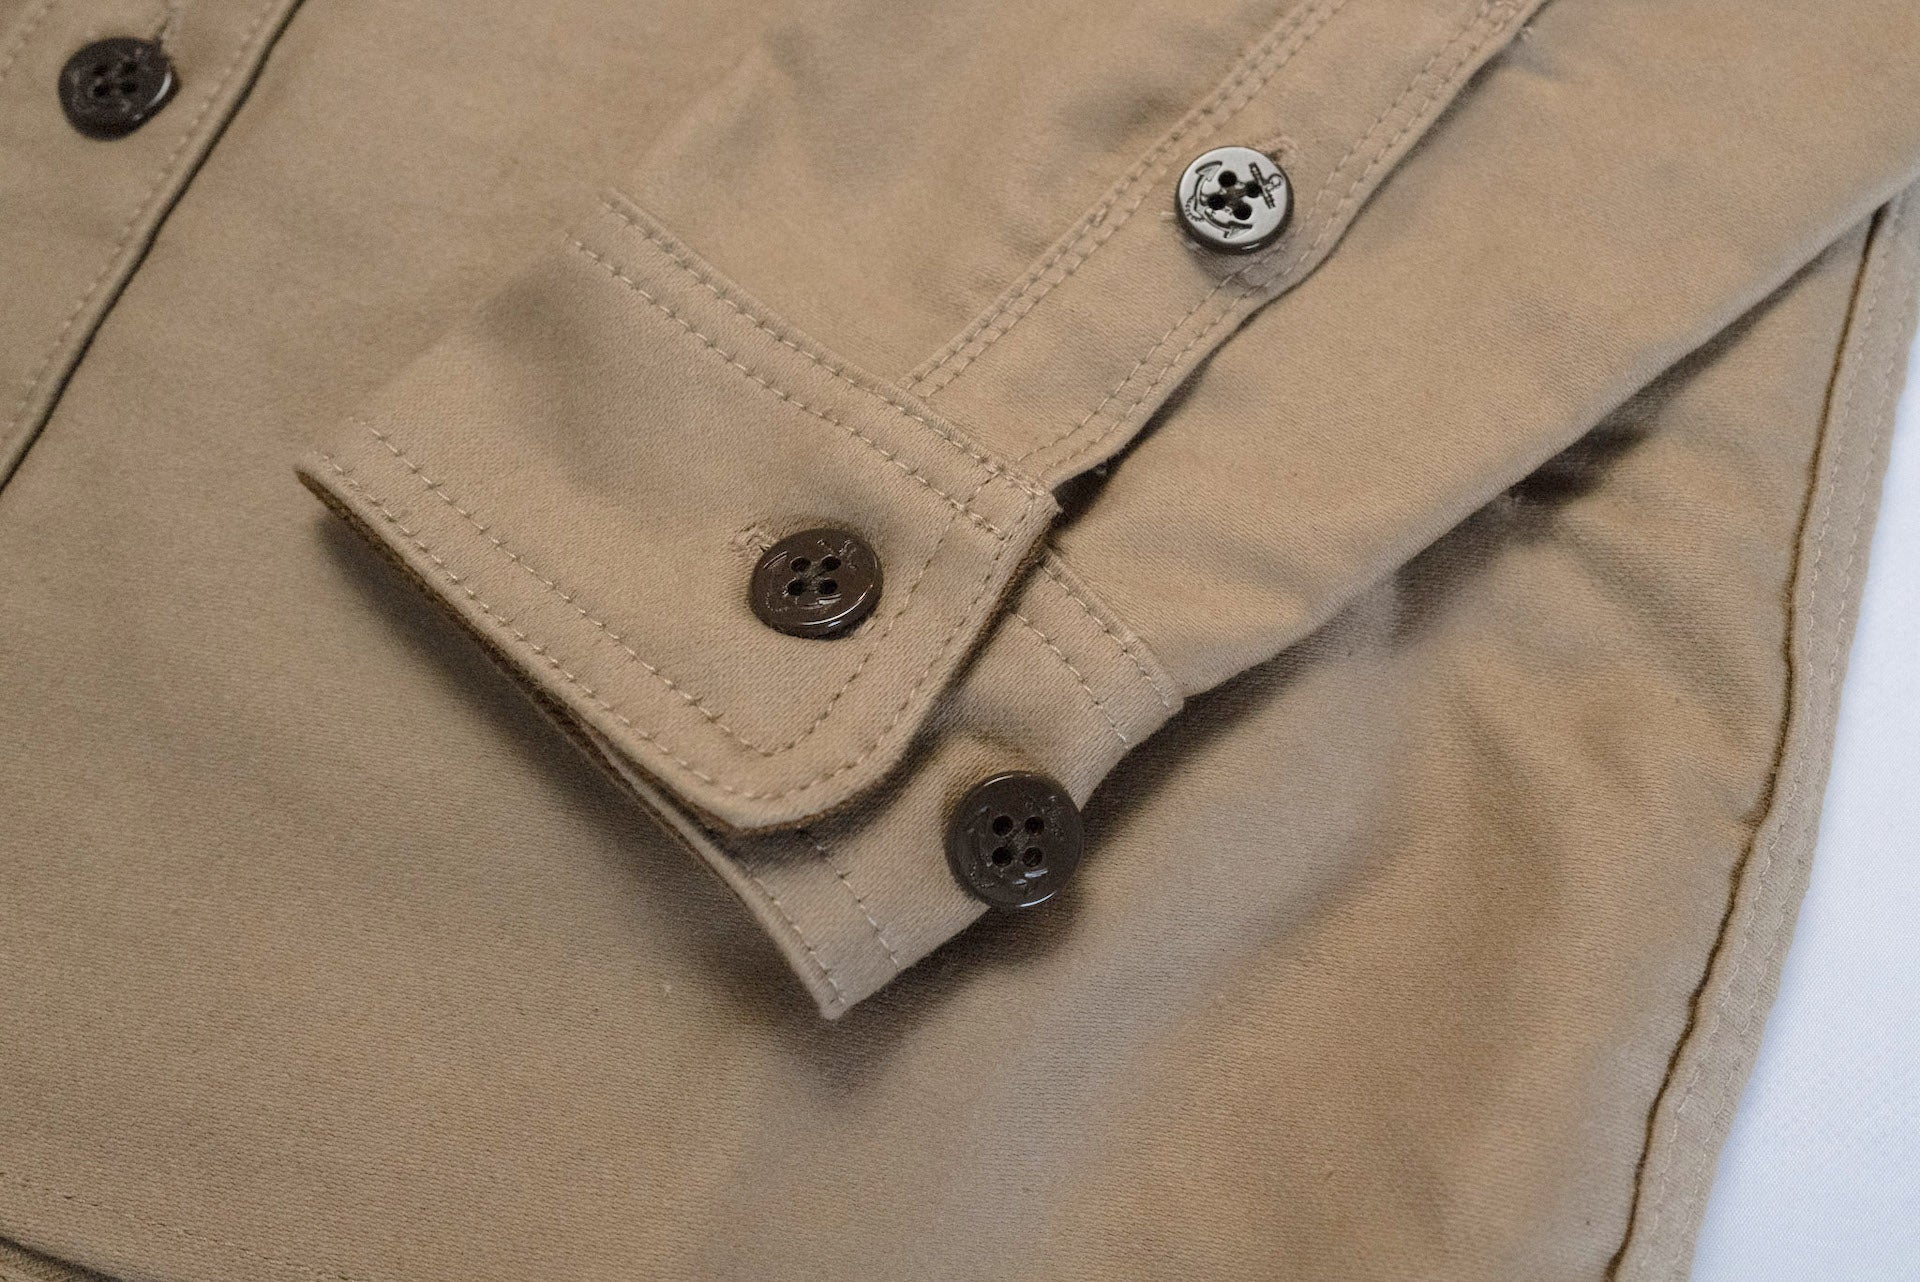 Unique Garment 'Deck Master' Moleskin C.P.O Jacketed Shirt (Sand Beige)